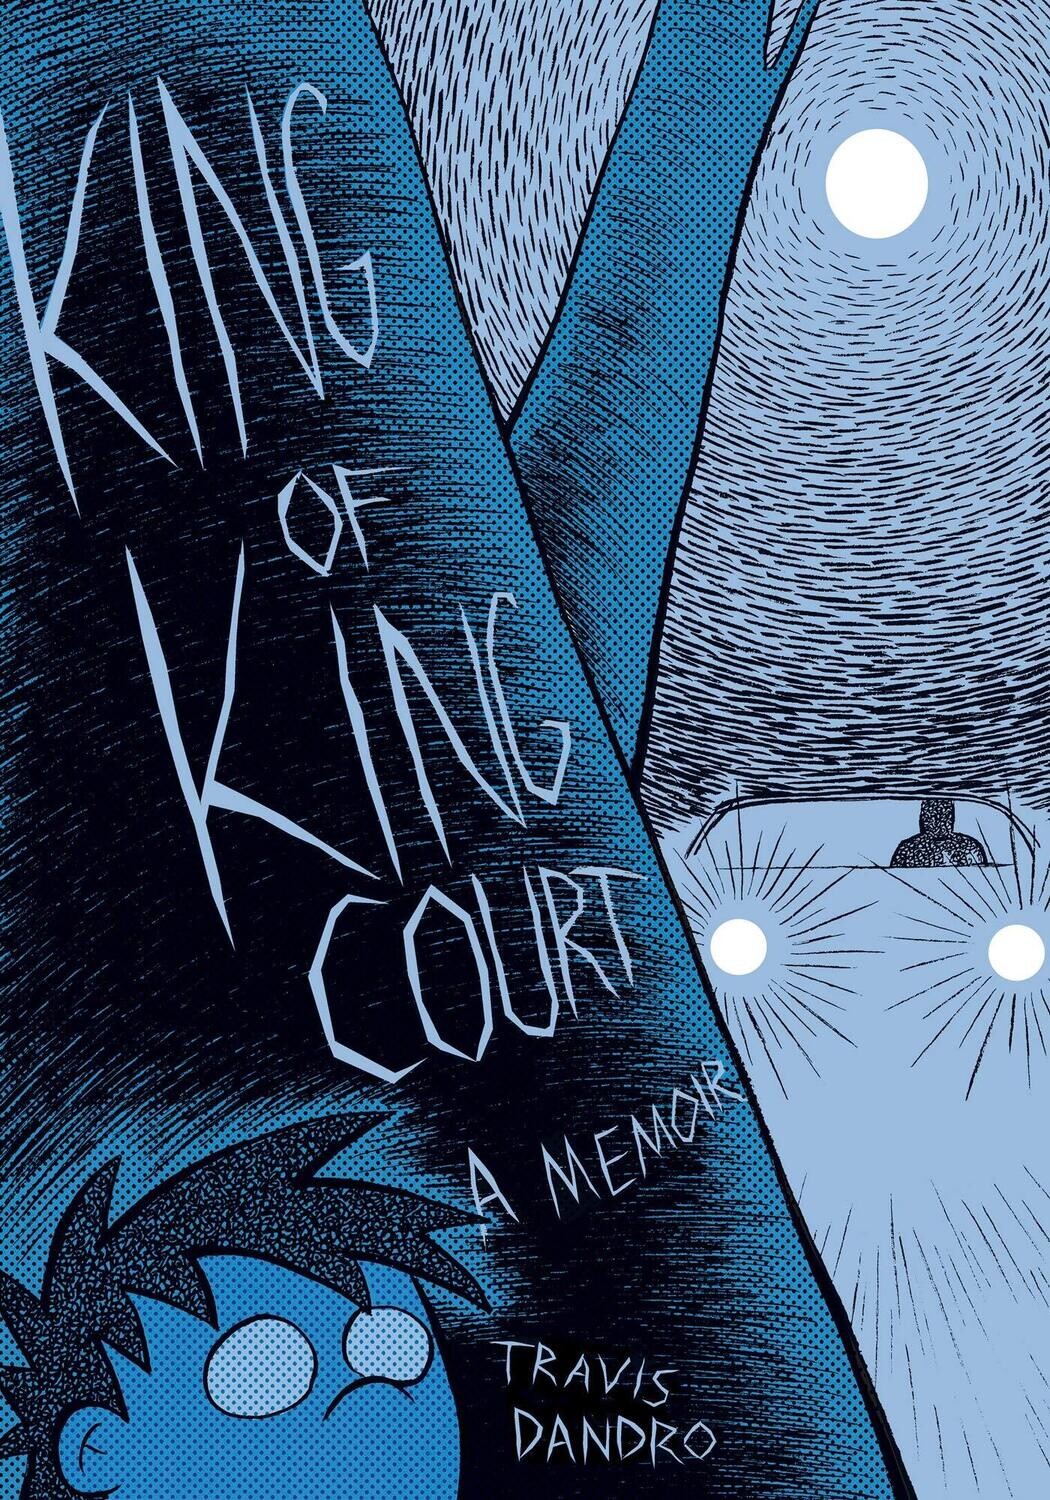 Travis Dandro: King of king court, A memoir